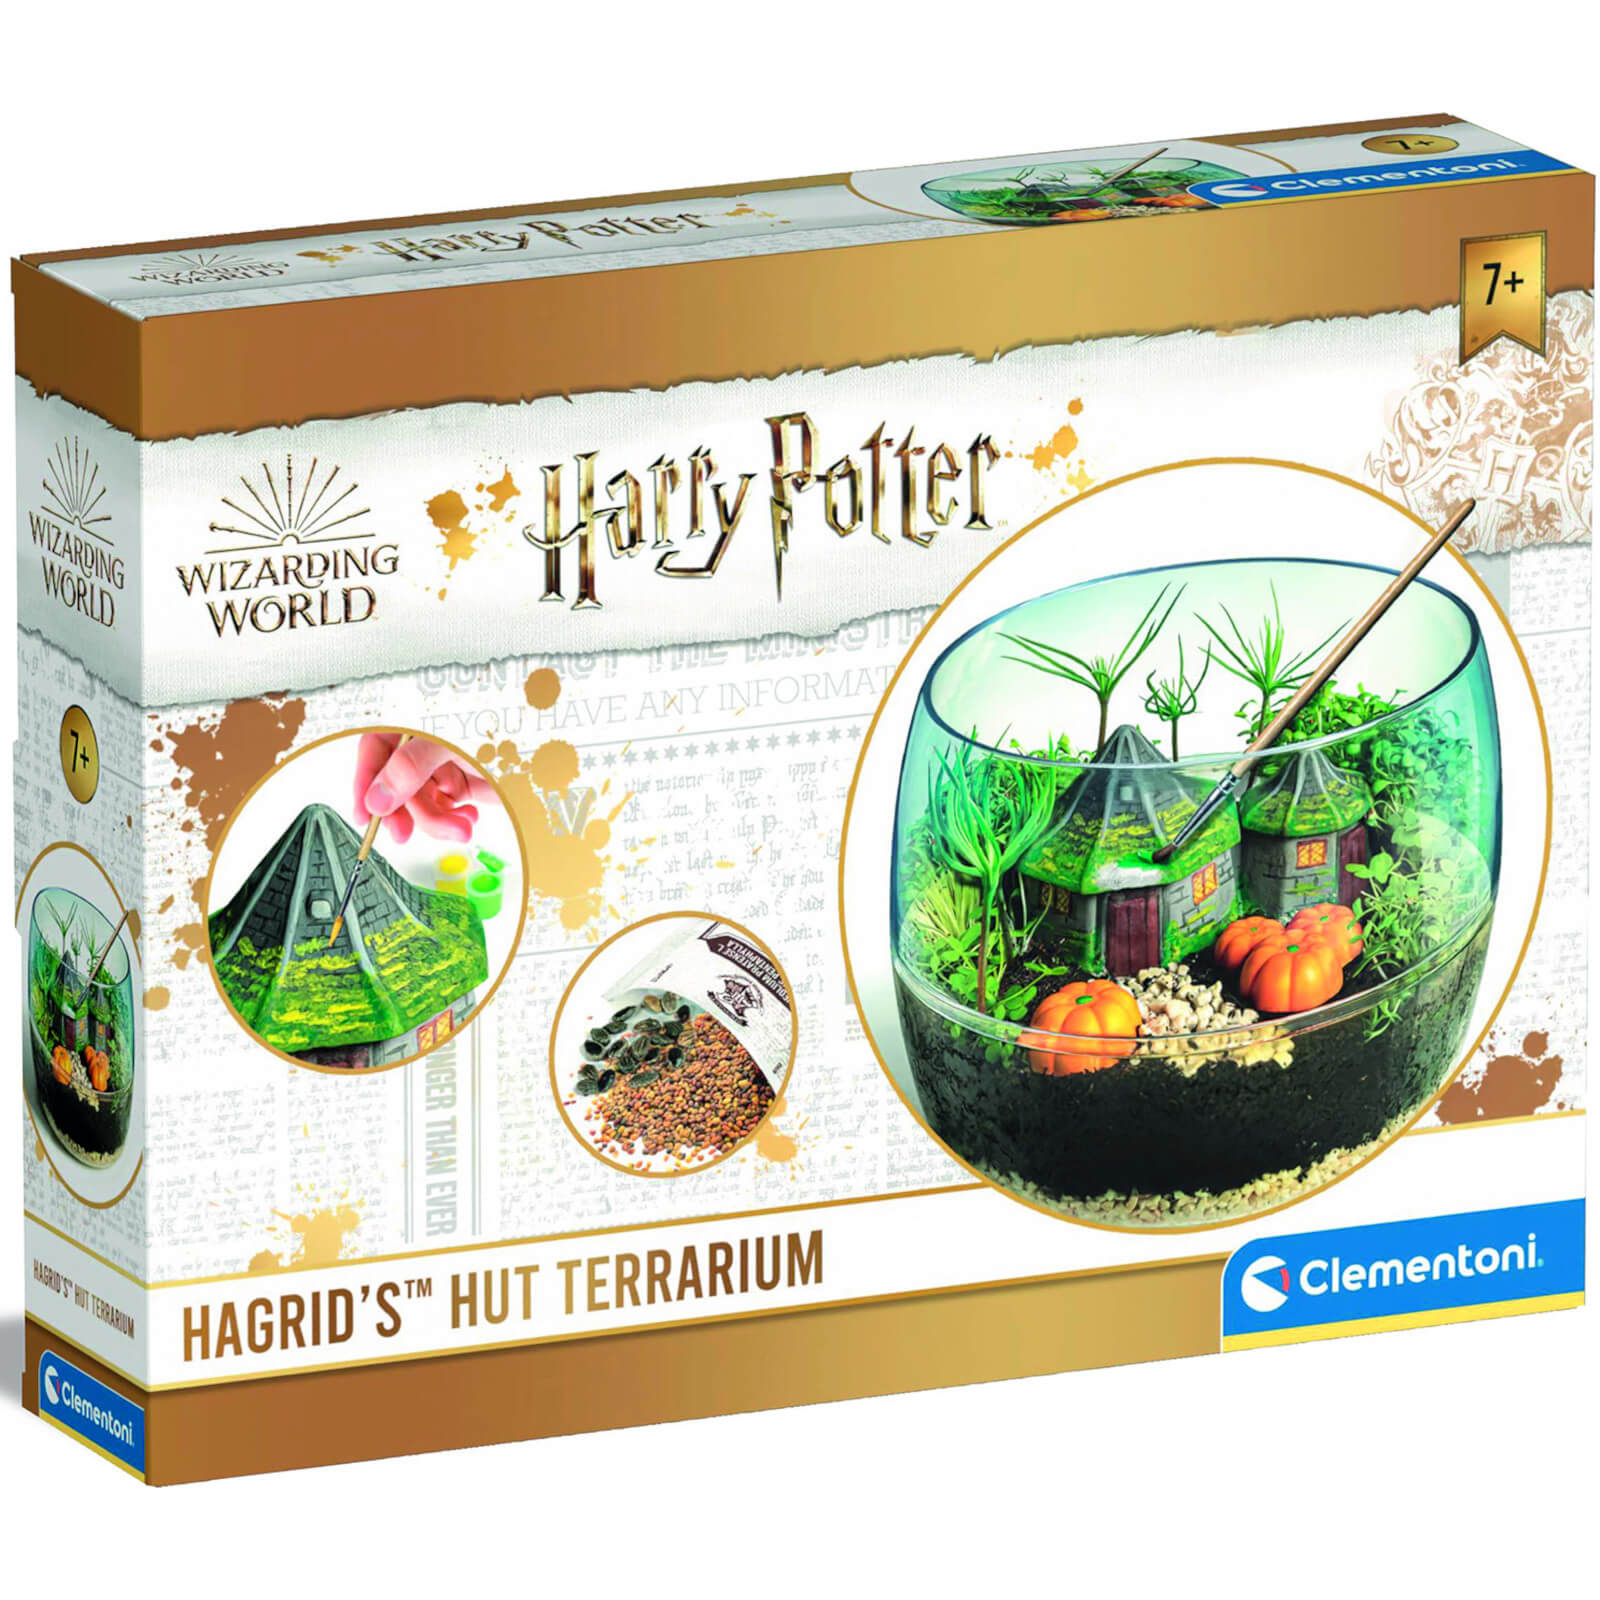 Clementoni Harry Potter Hagrid's Hut Terrarium